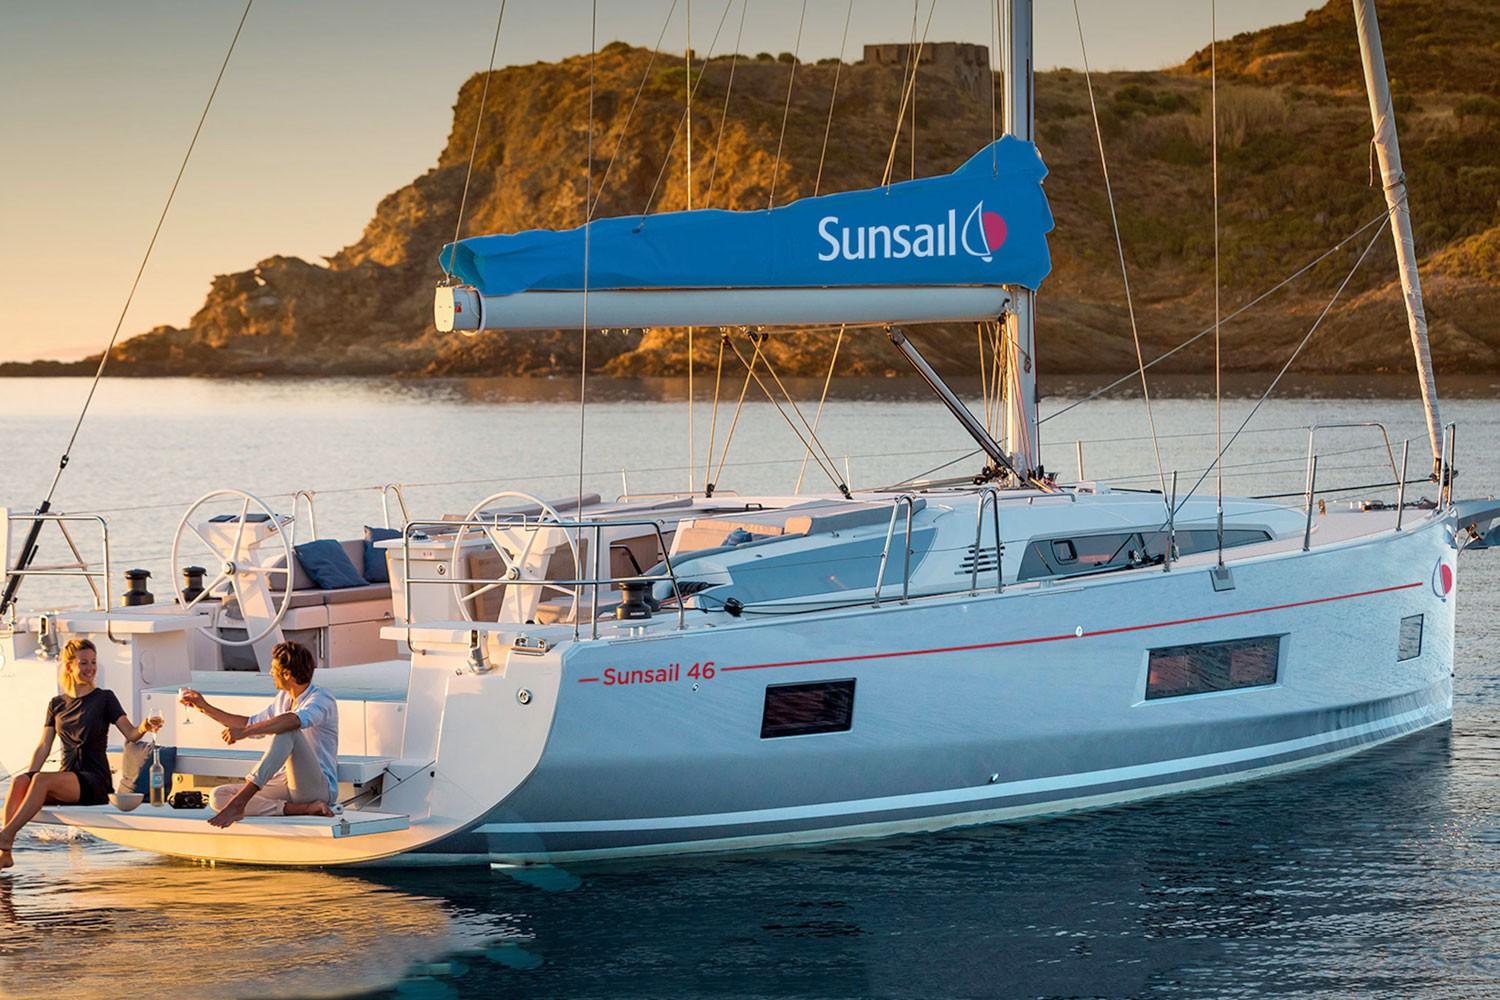 Sunsail closes the base in Mallorca